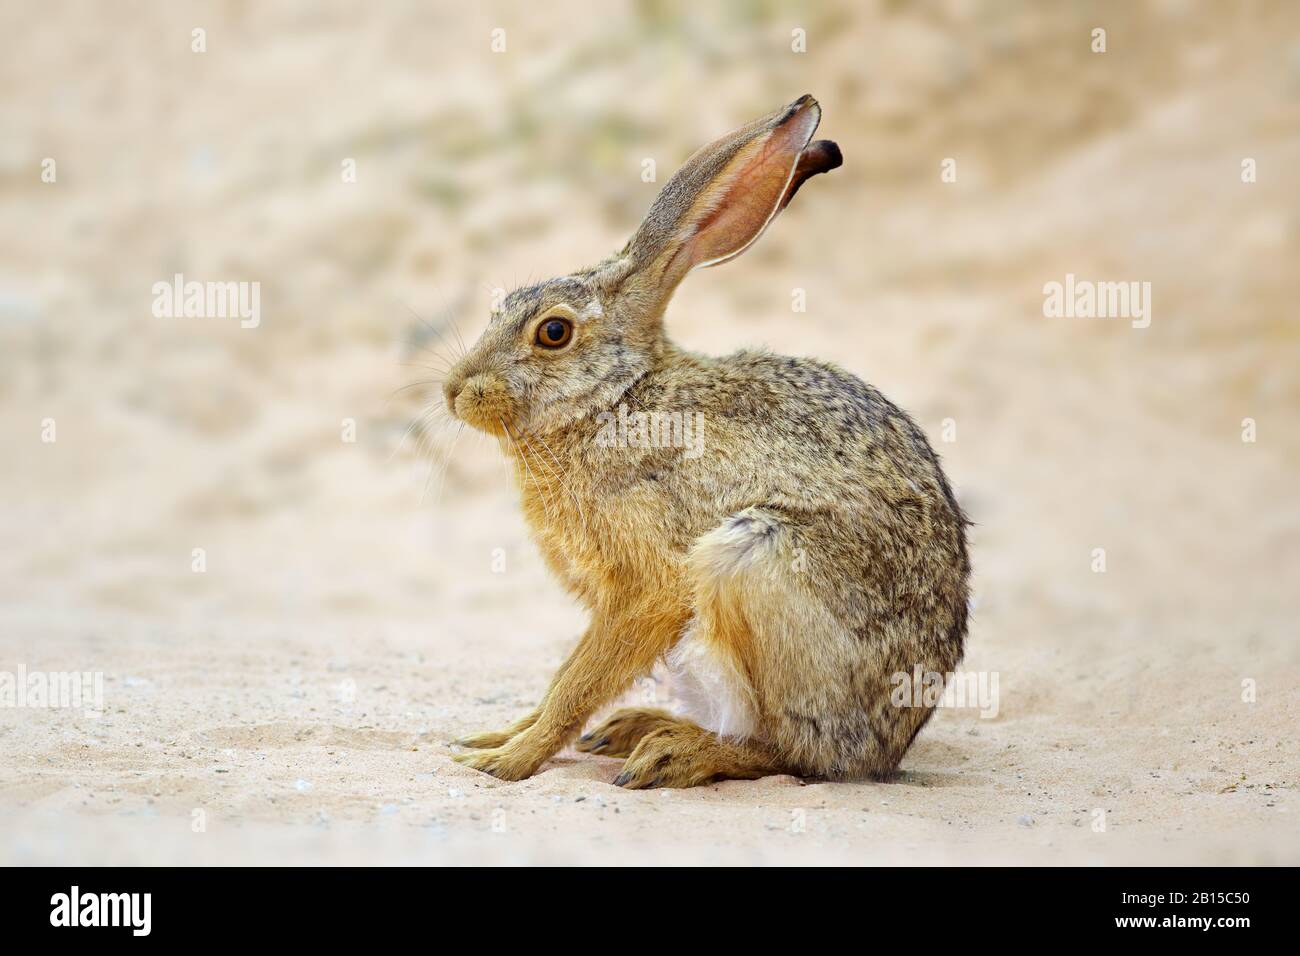 An alert scrub hare (Lepus saxatilis) sitting upright, South Africa Stock Photo